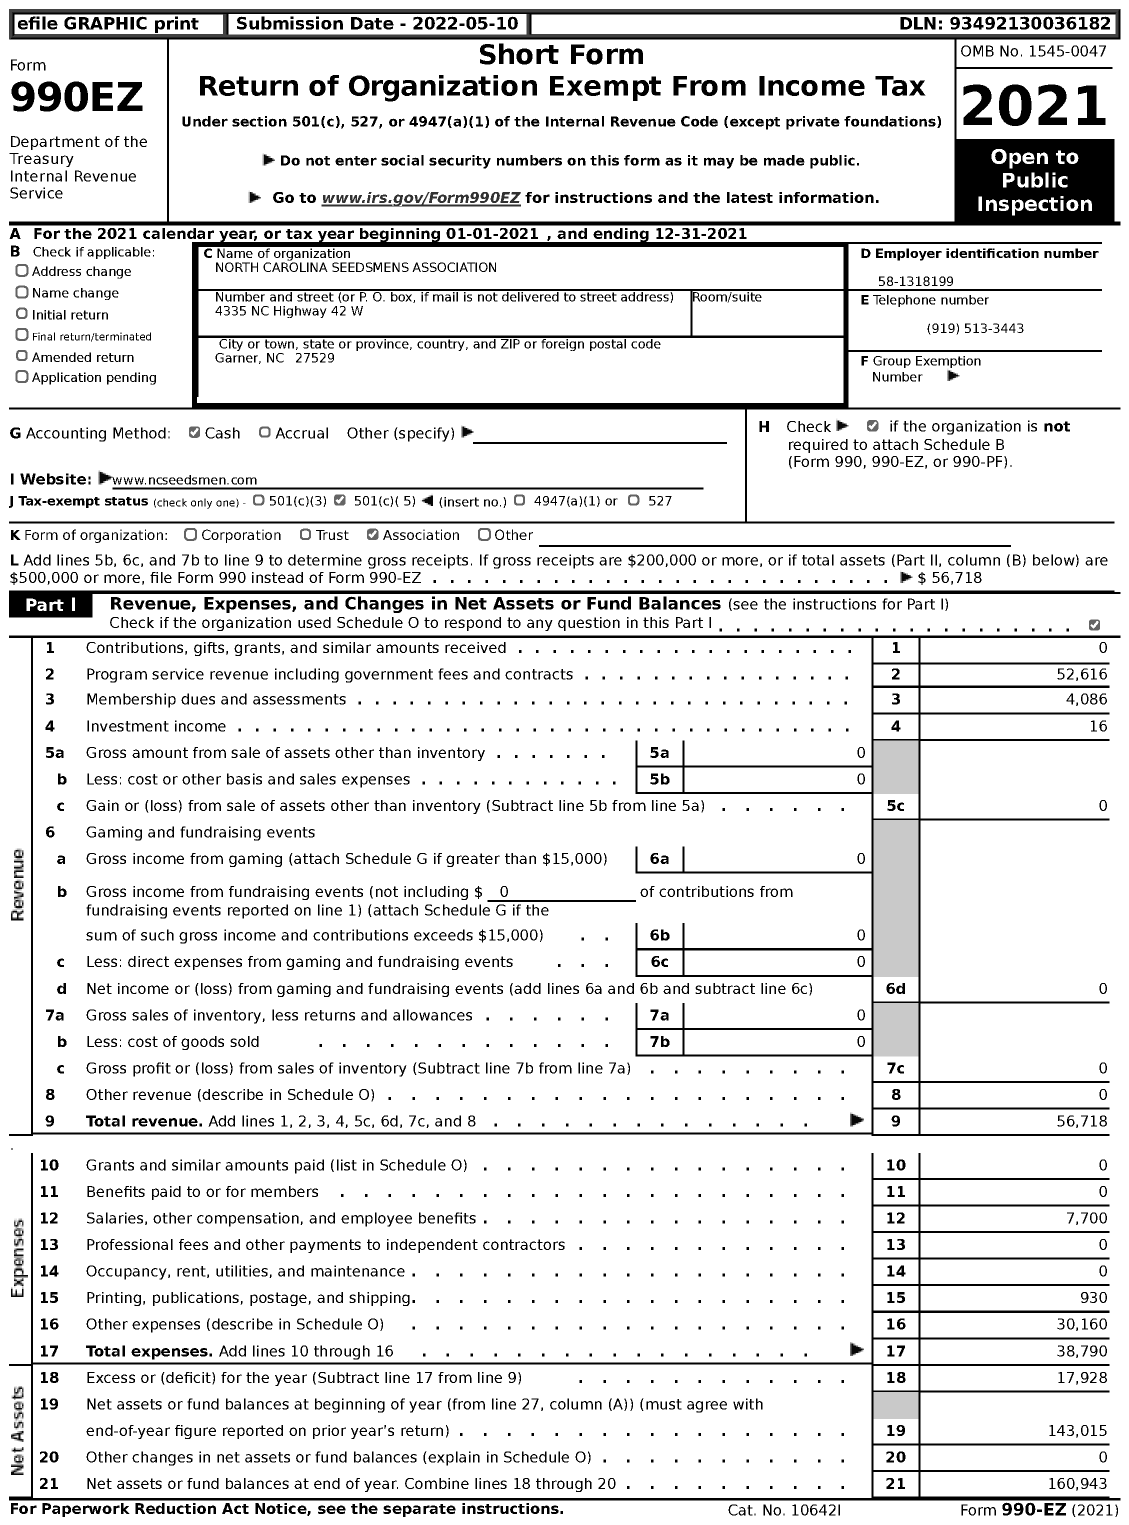 Image of first page of 2021 Form 990EZ for North Carolina Seedsmens Association